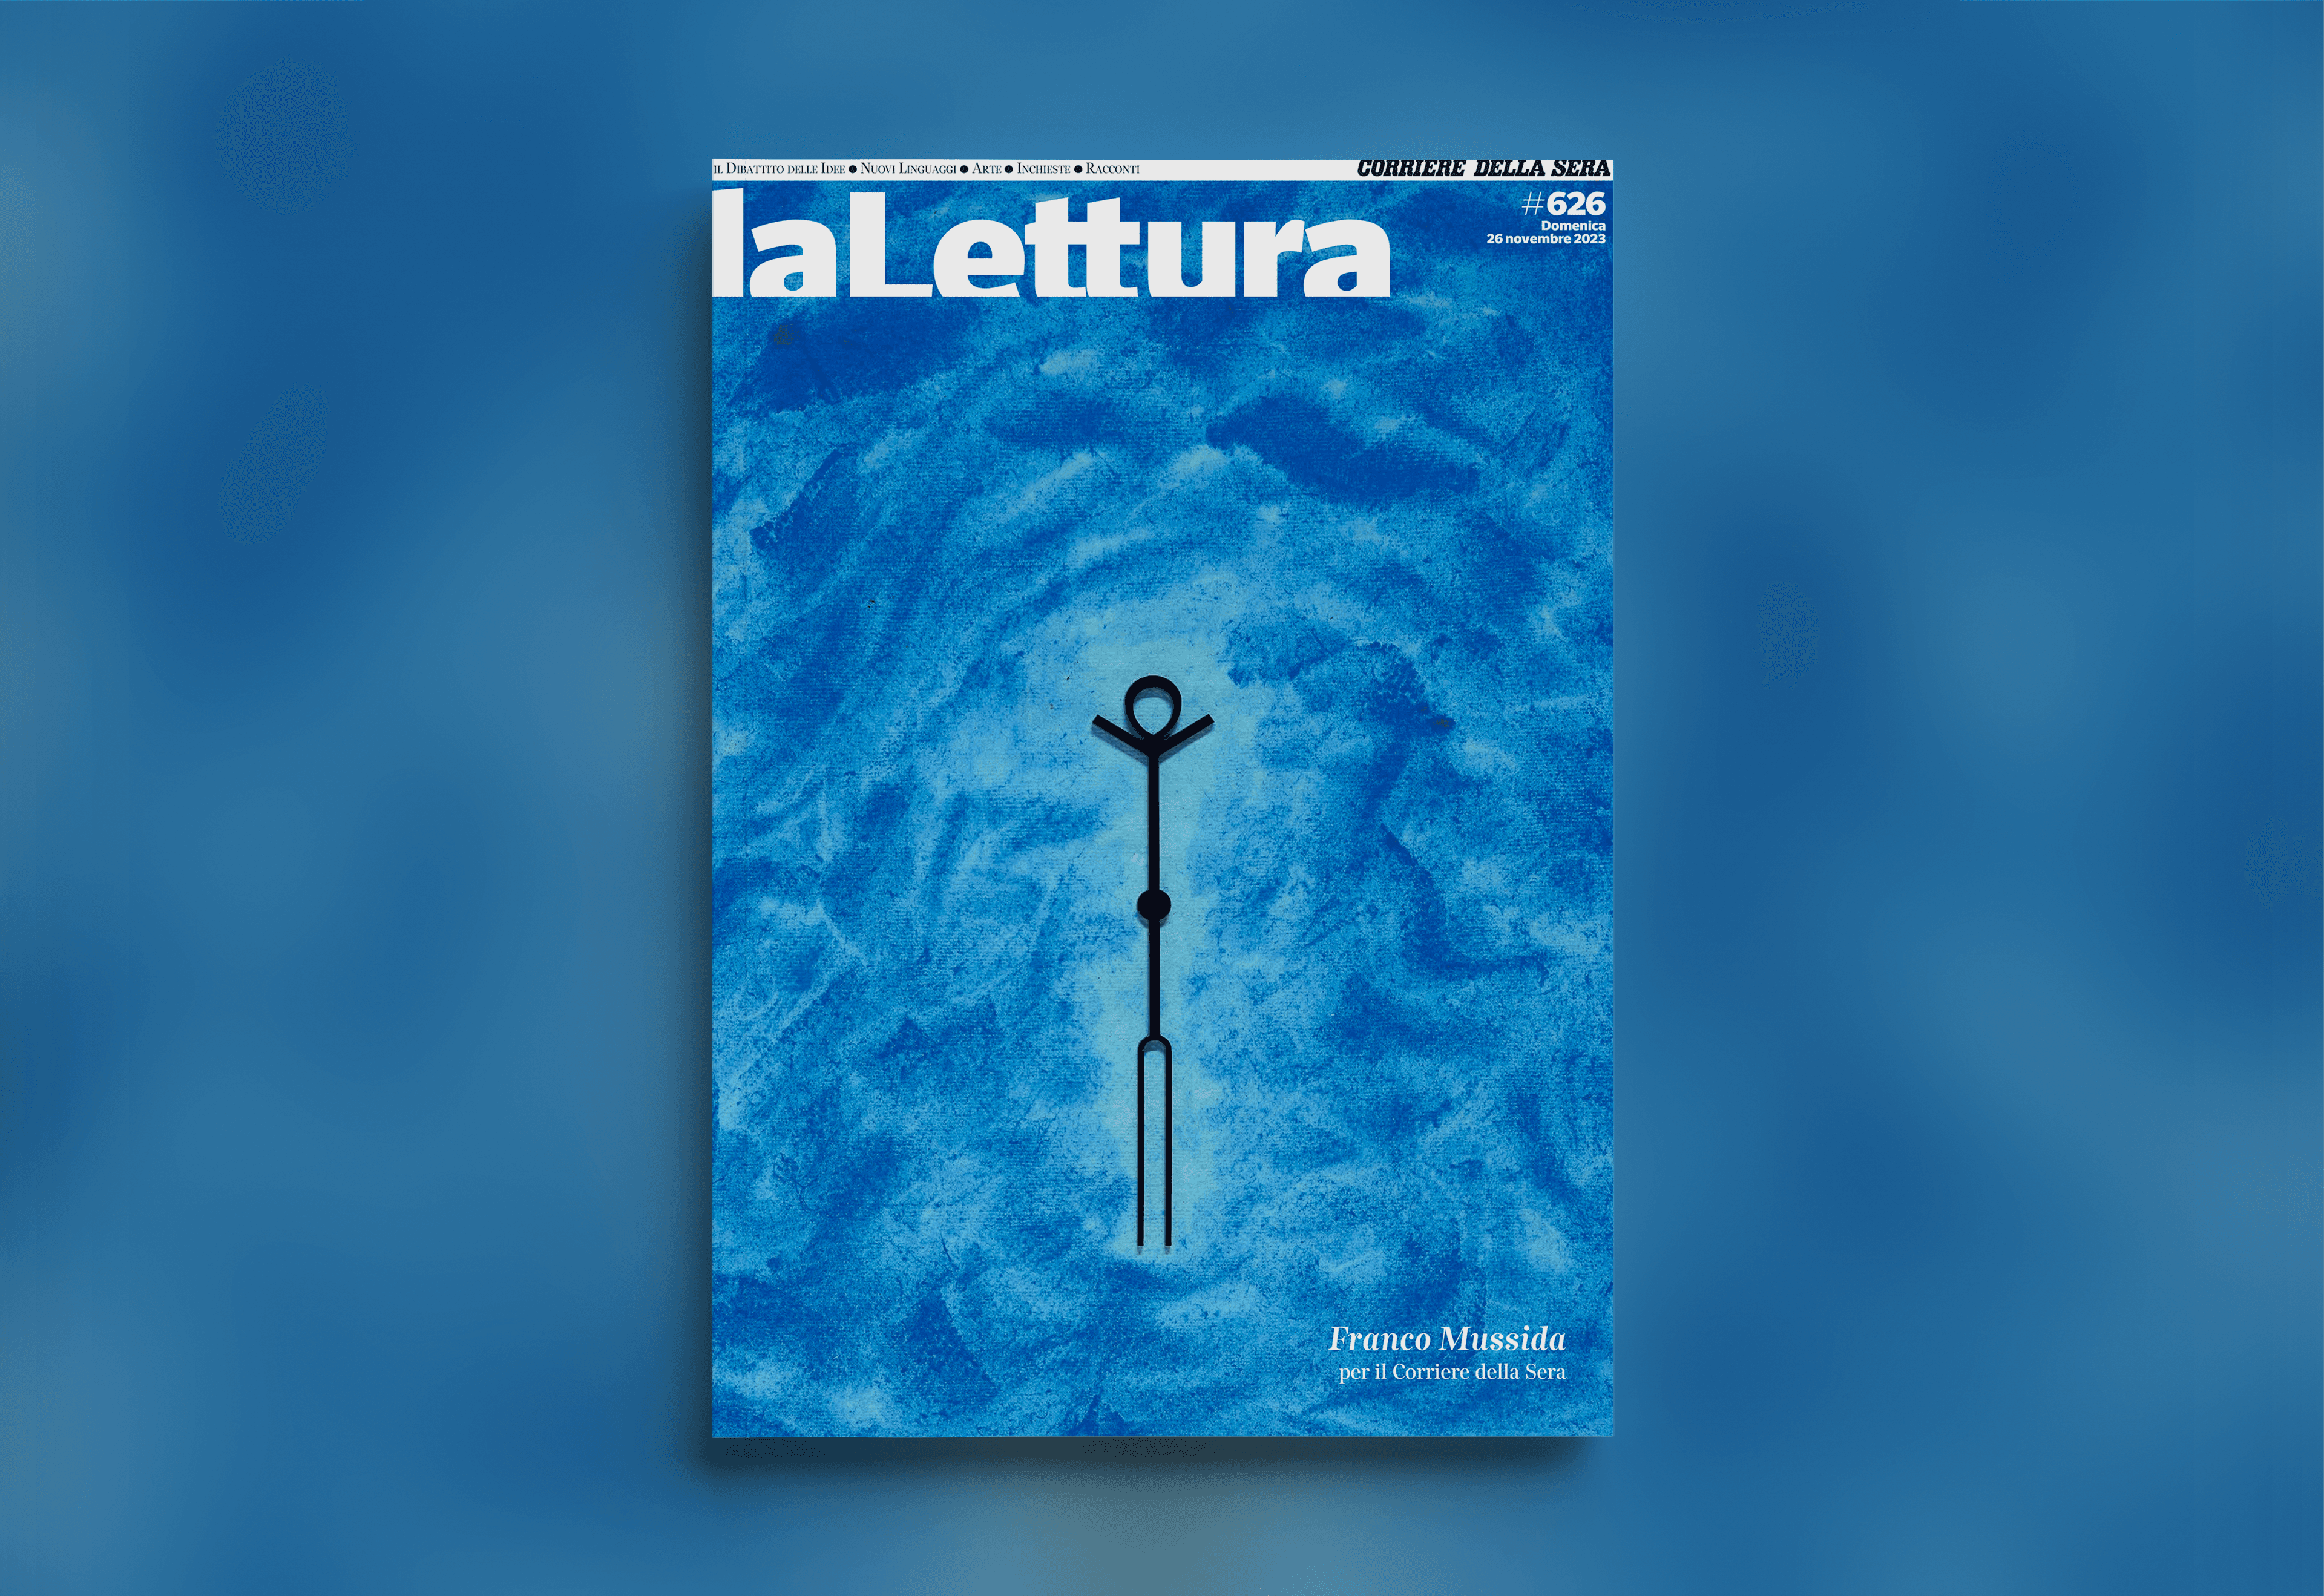 Edition #626 of la Lettura featuring Franco Mussida